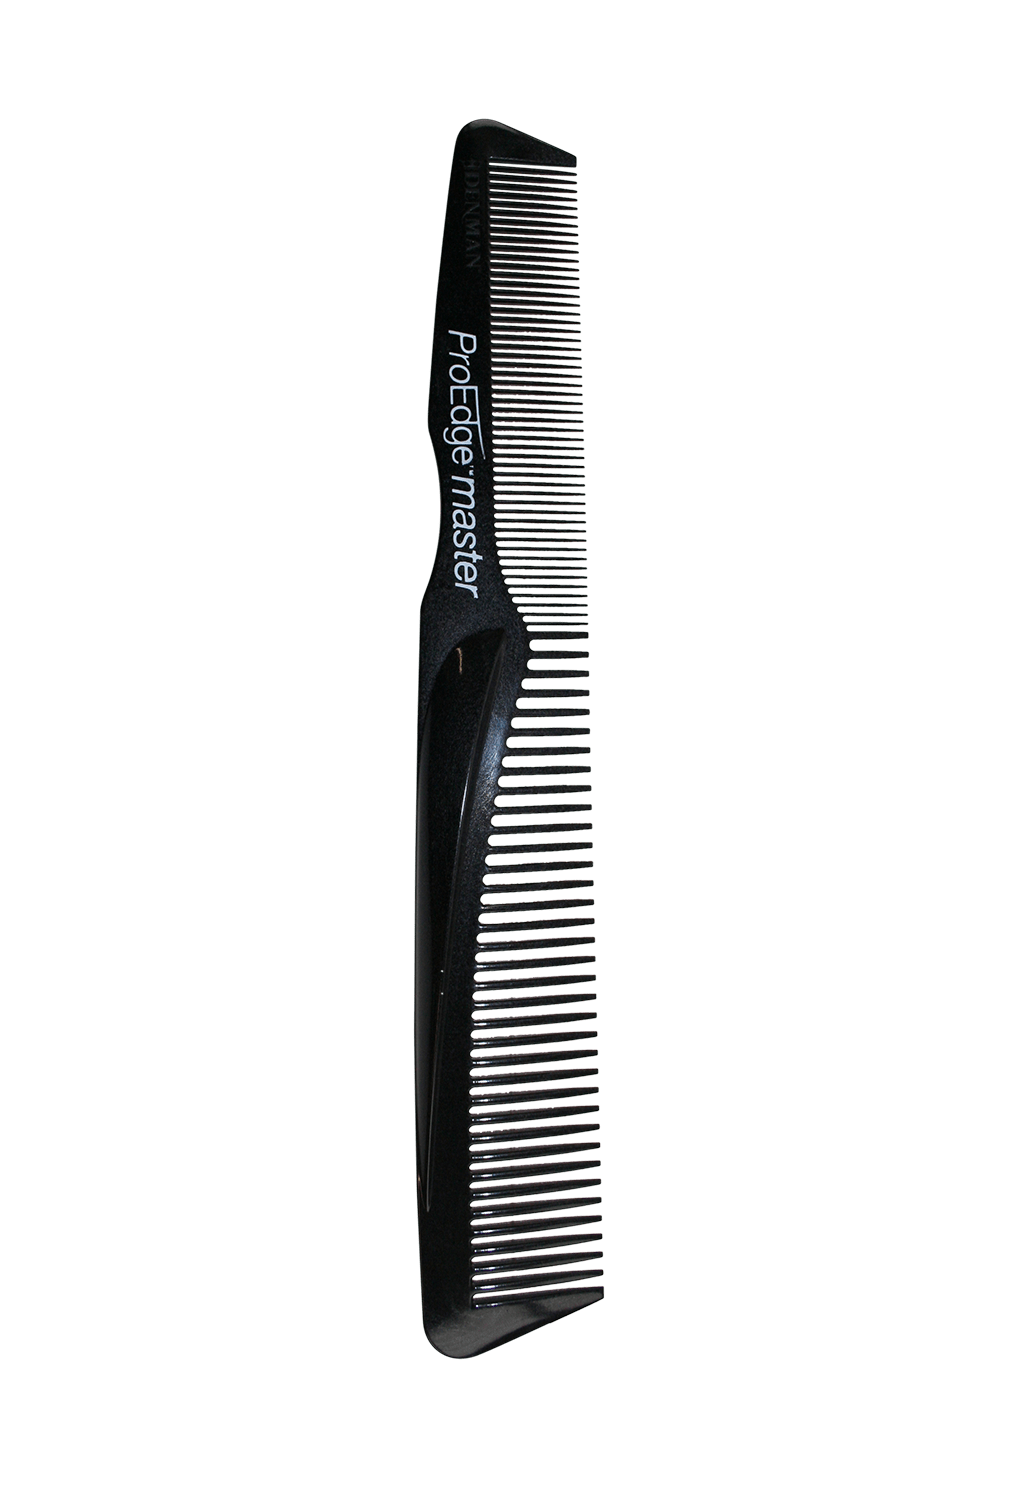 Pro Edge Master Cutting Comb Black 215mm Hair - Denman - Luxe Pacifique